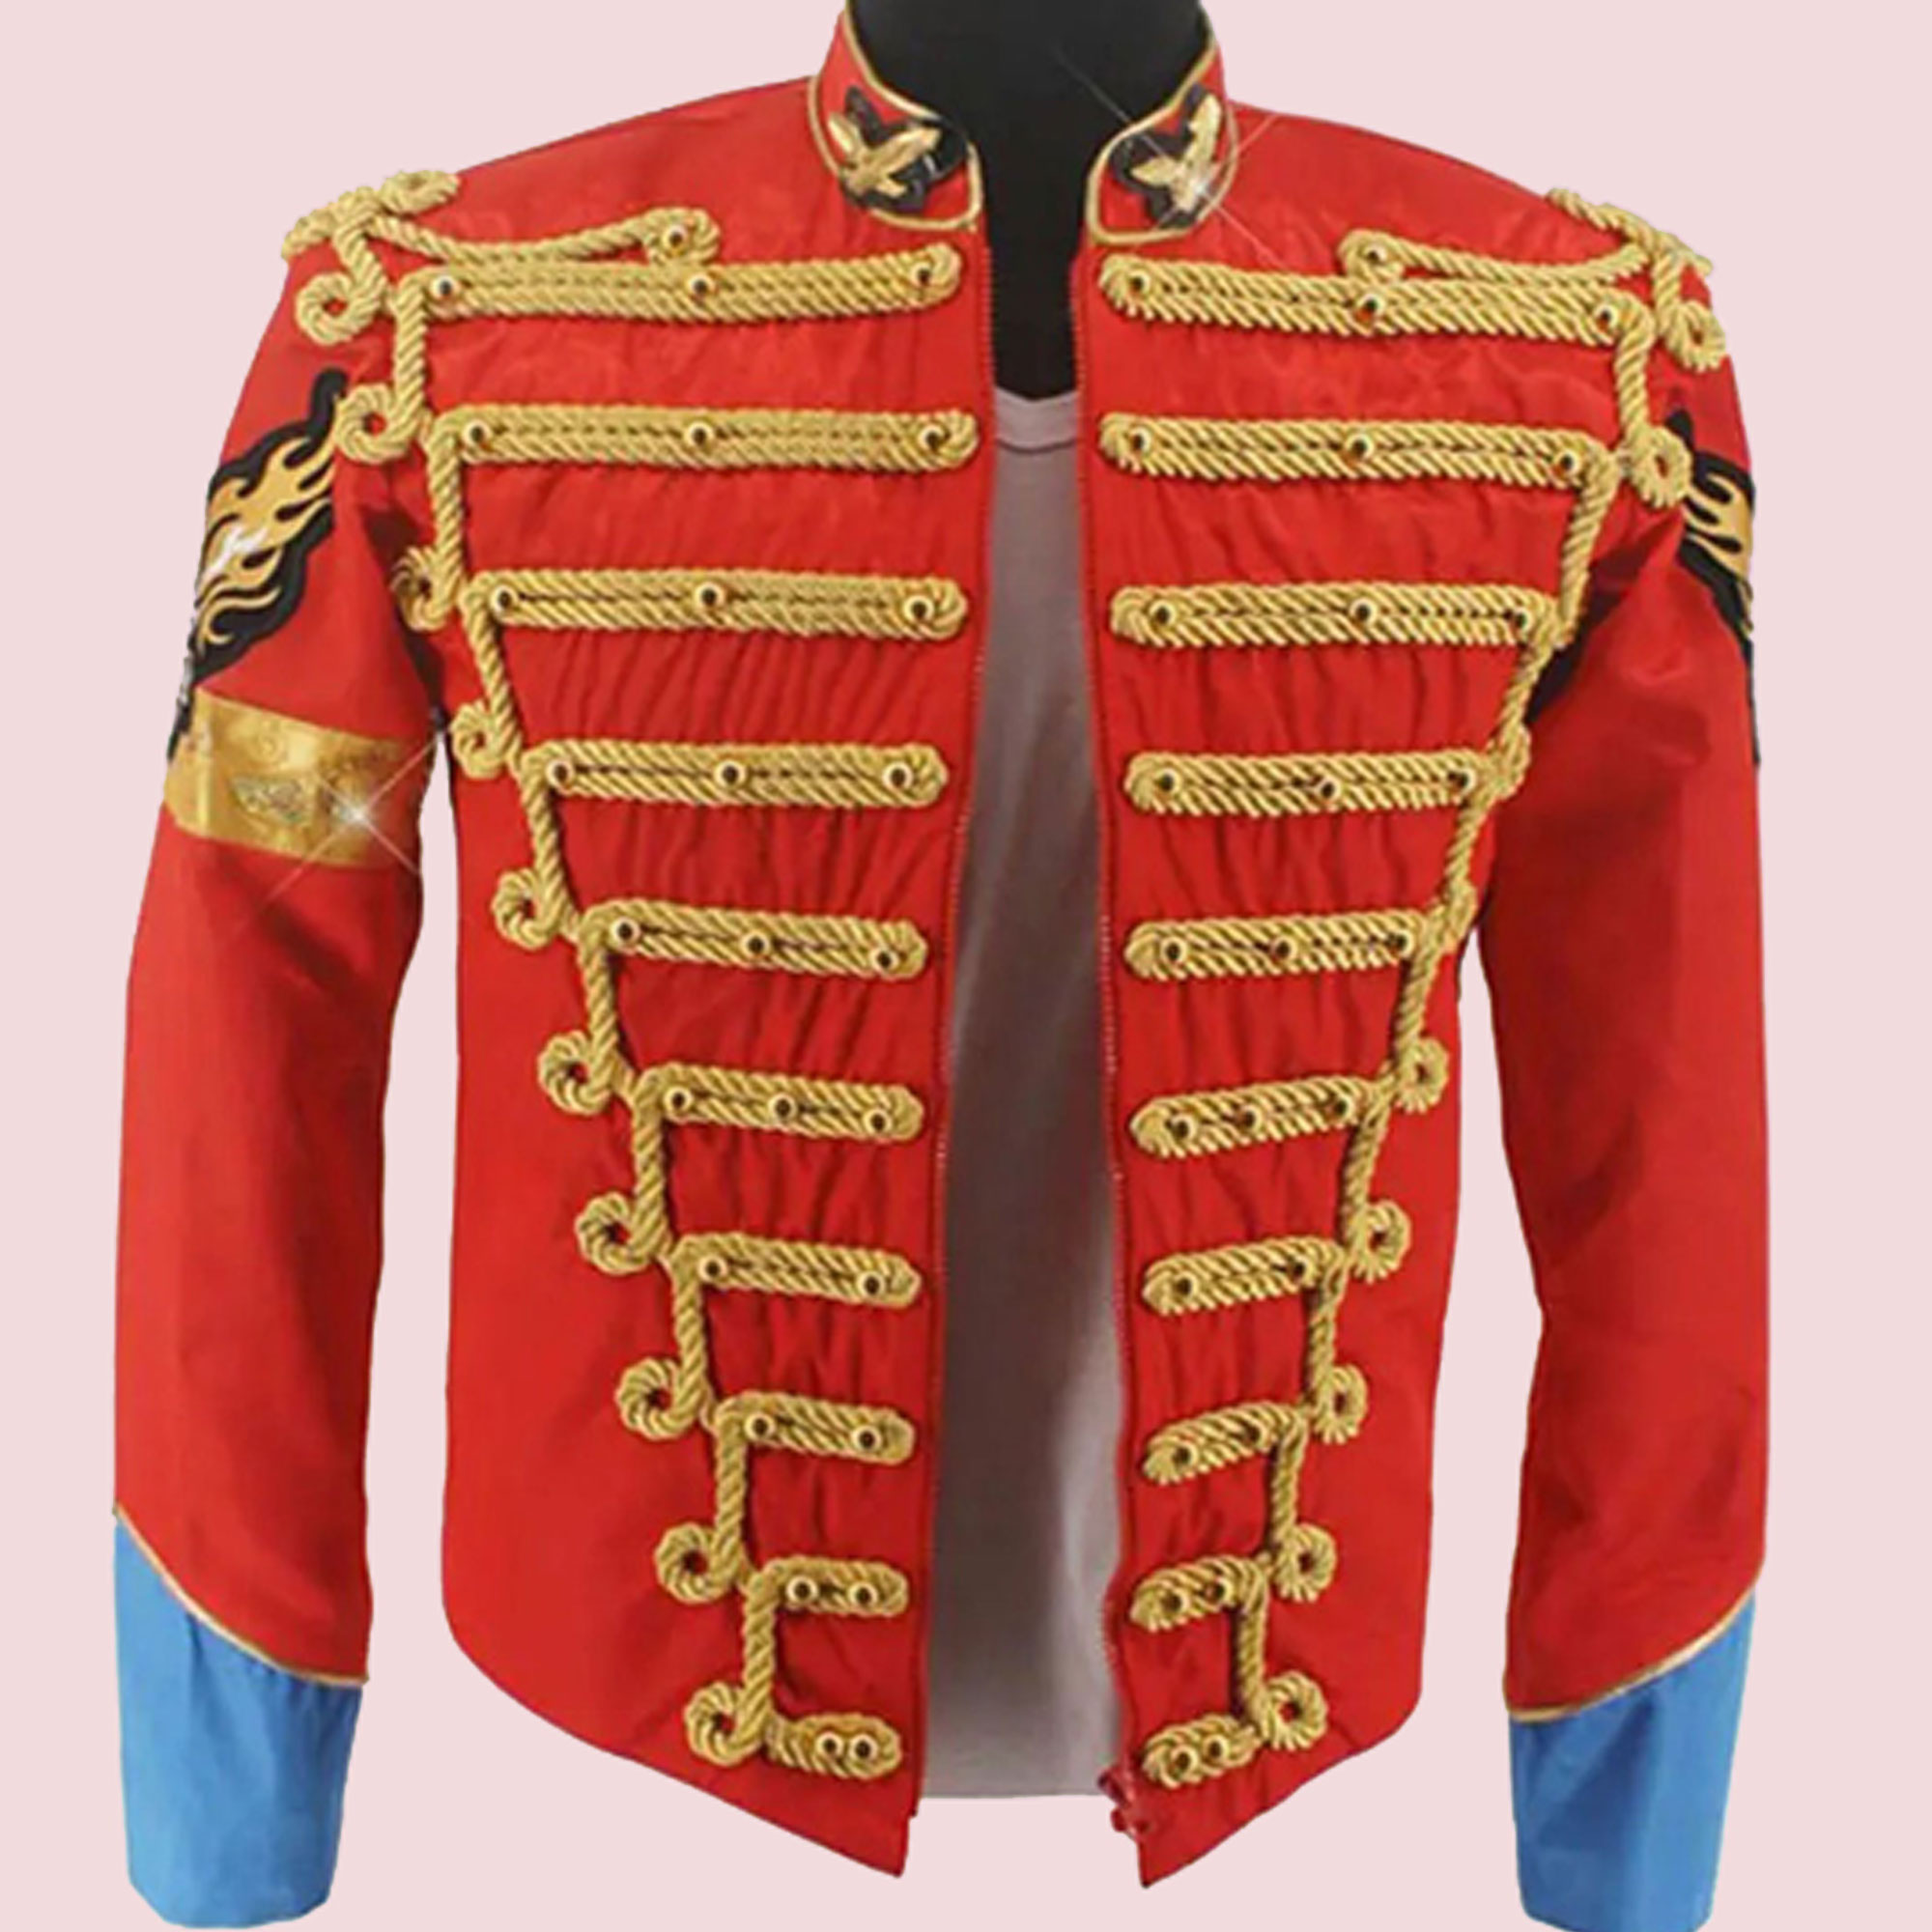 Mans fashion jacket,Michael Jackson Red British Army Jacket,Man,s fashion braid jacket - 557